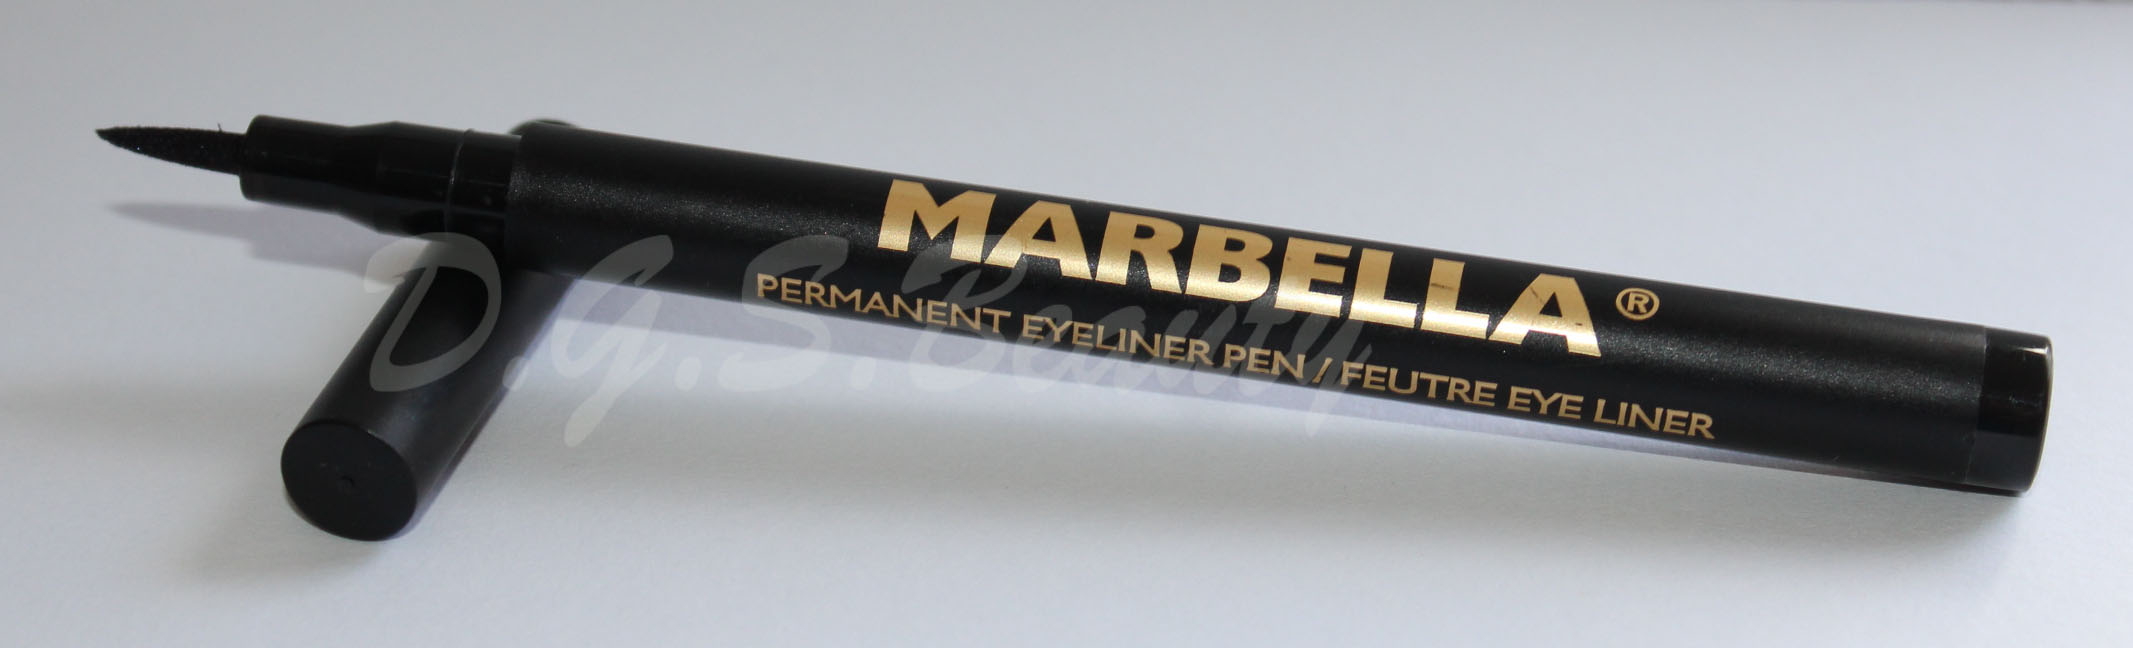 Marbella 24hr Eyeliner - Extreme long lasting Review